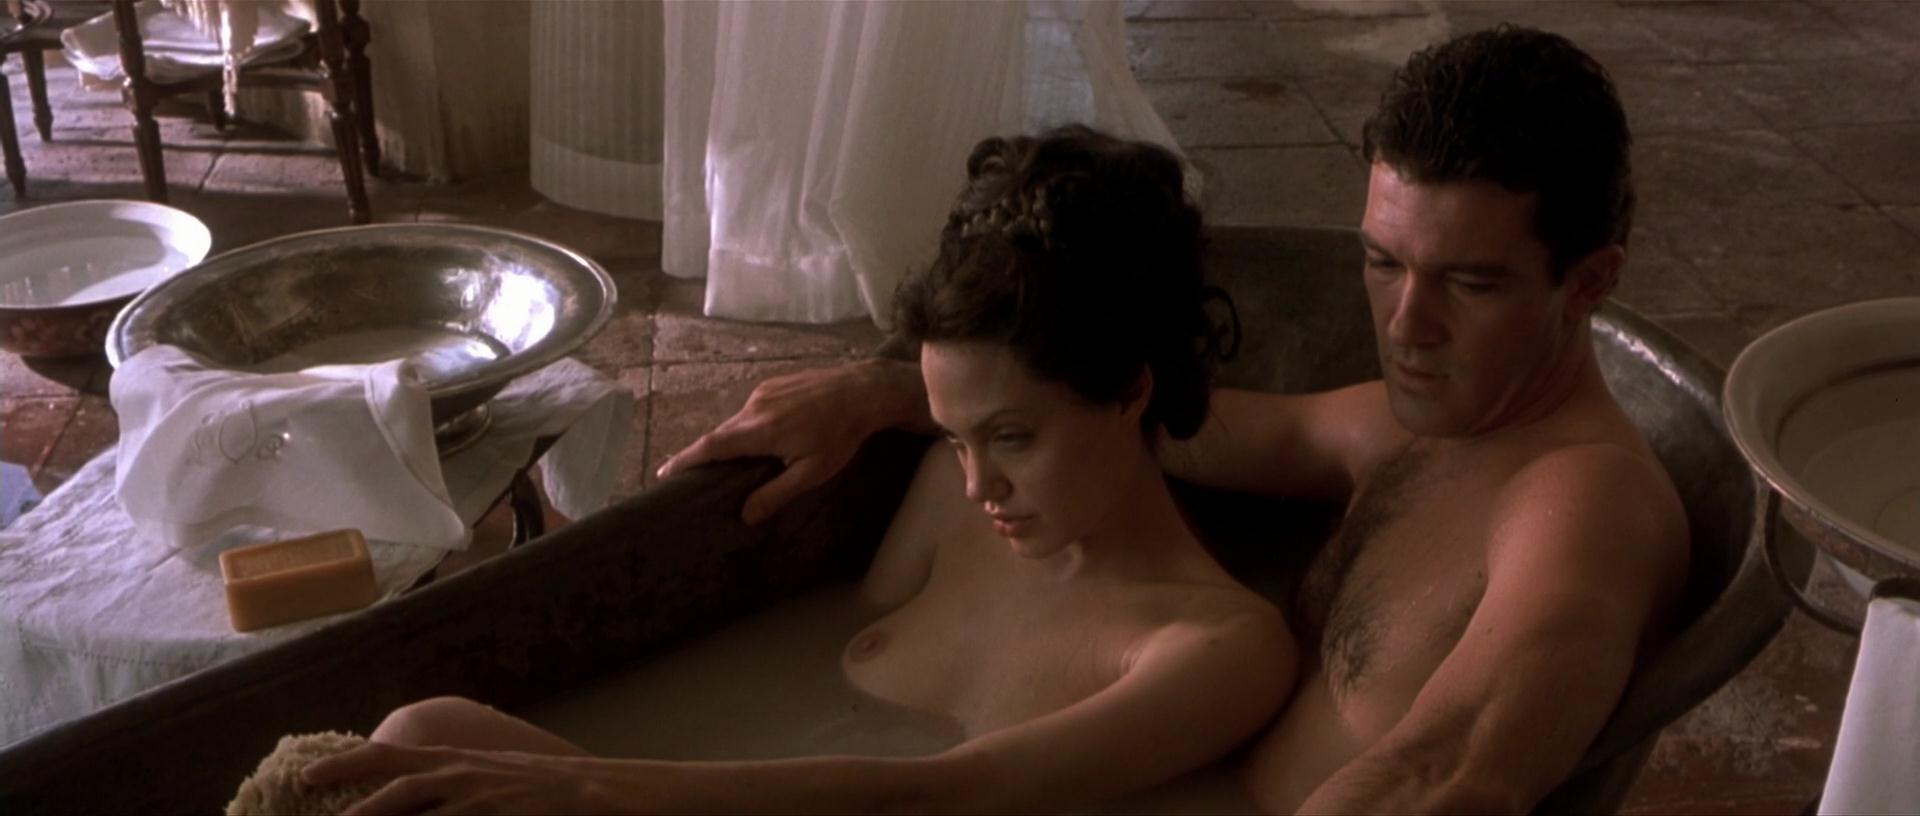 Angelina golie nude